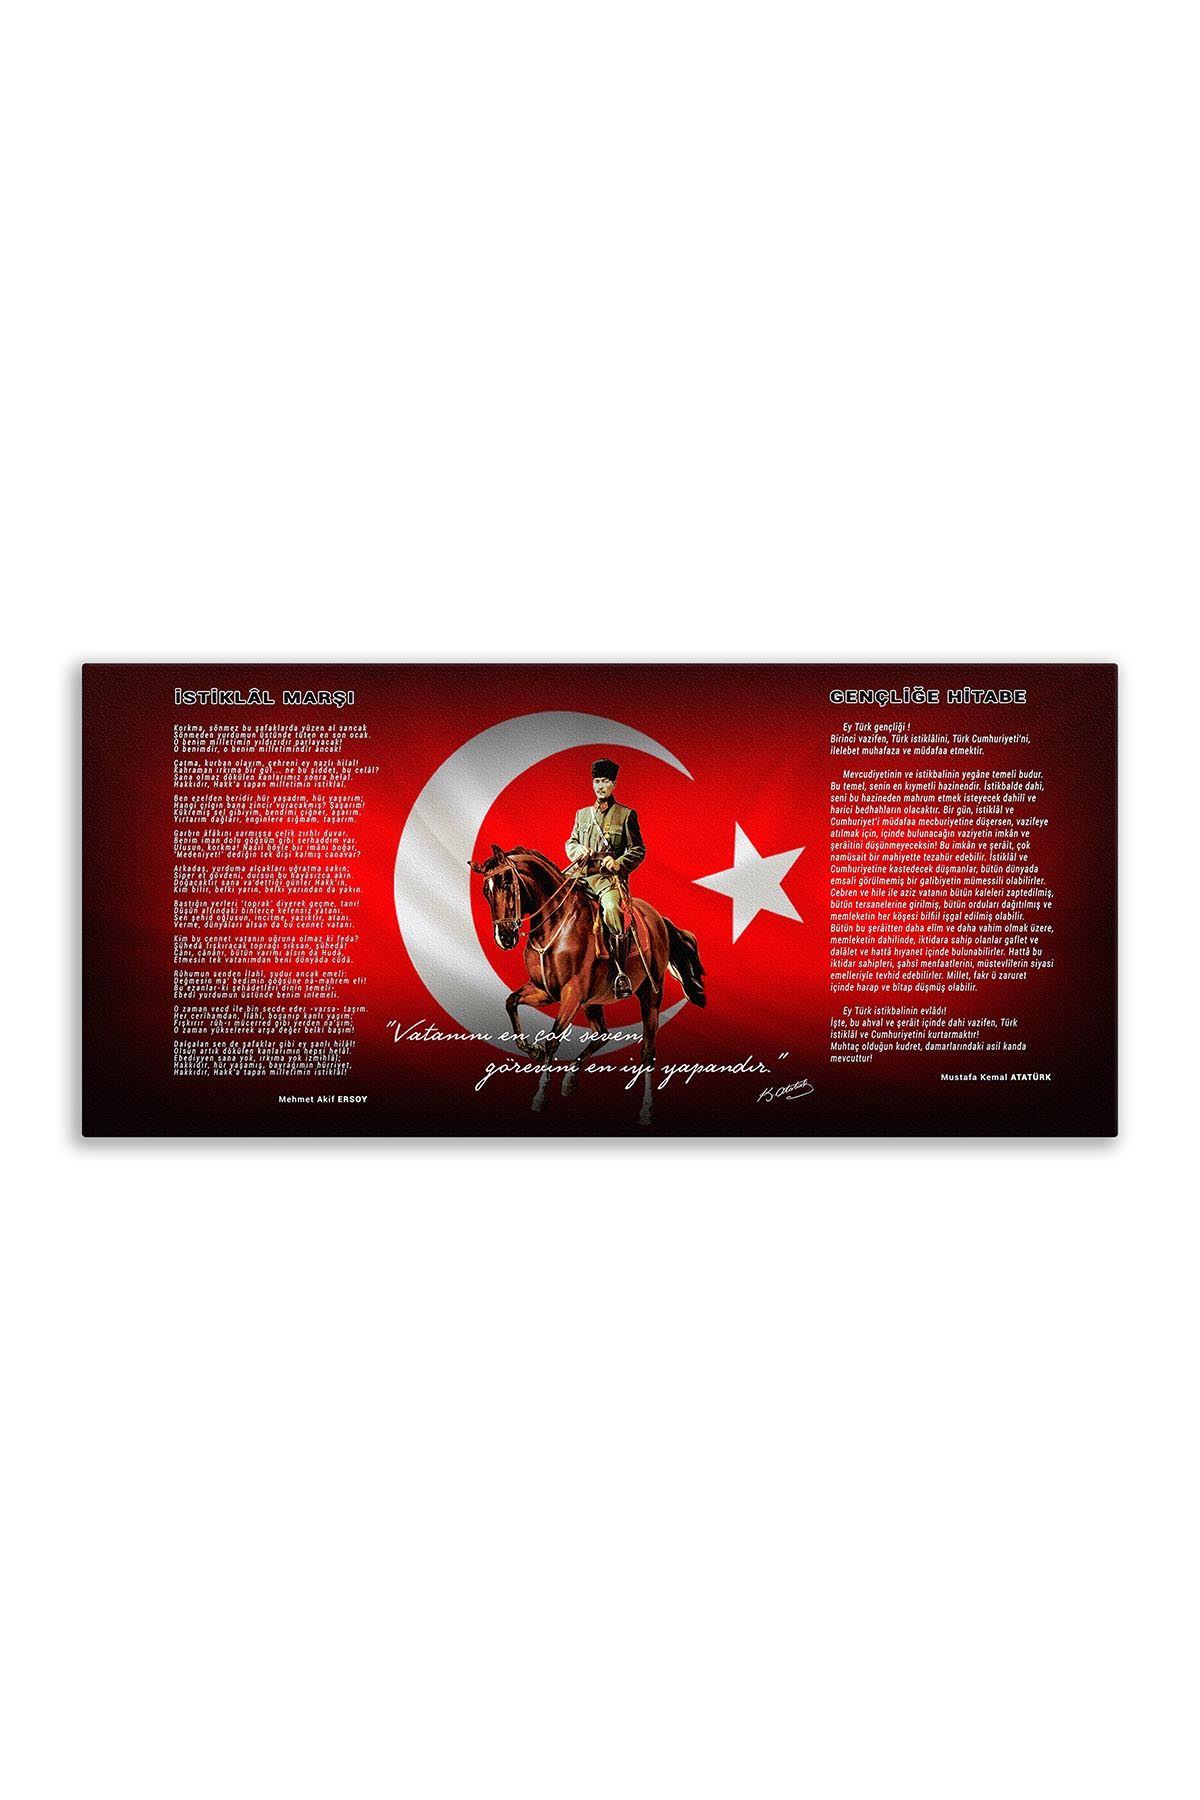 Atatürk Canvas Board With Turkish Flag | Printed Canvas Board | Digital Printing